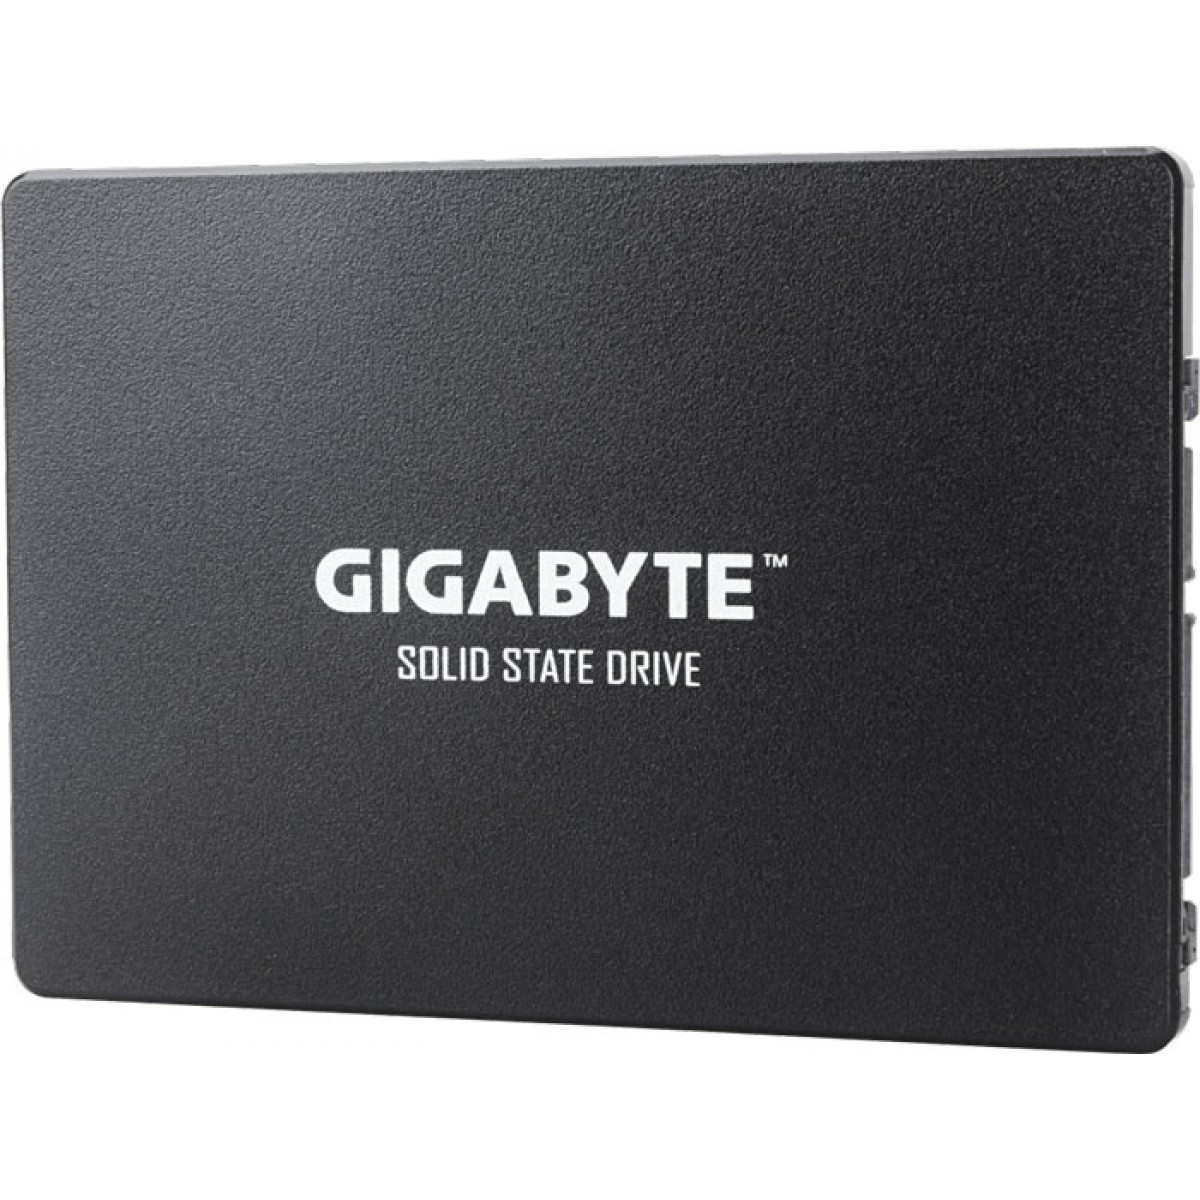 SSD Gigabyte, 120GB, Sata III, Leitura 500MBs e Gravação 380MBs, GP-GSTFS31120GNTD